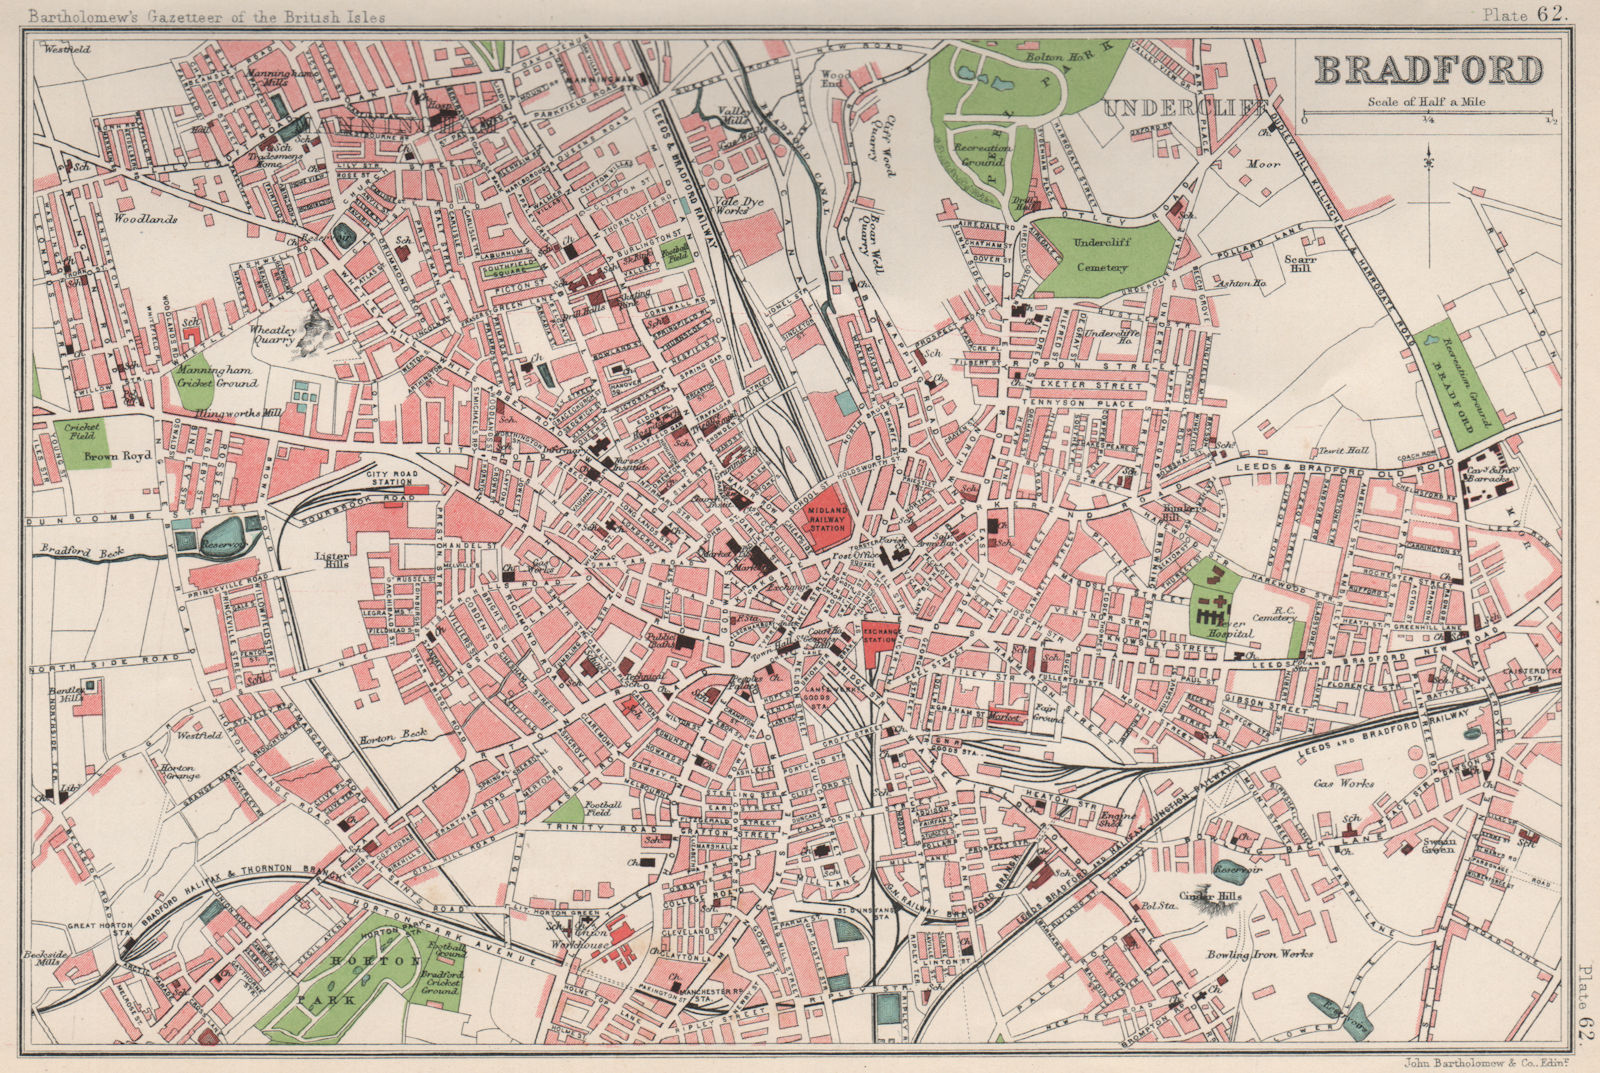 Associate Product BRADFORD antique town/city plan. BARTHOLOMEW 1904 old map chart